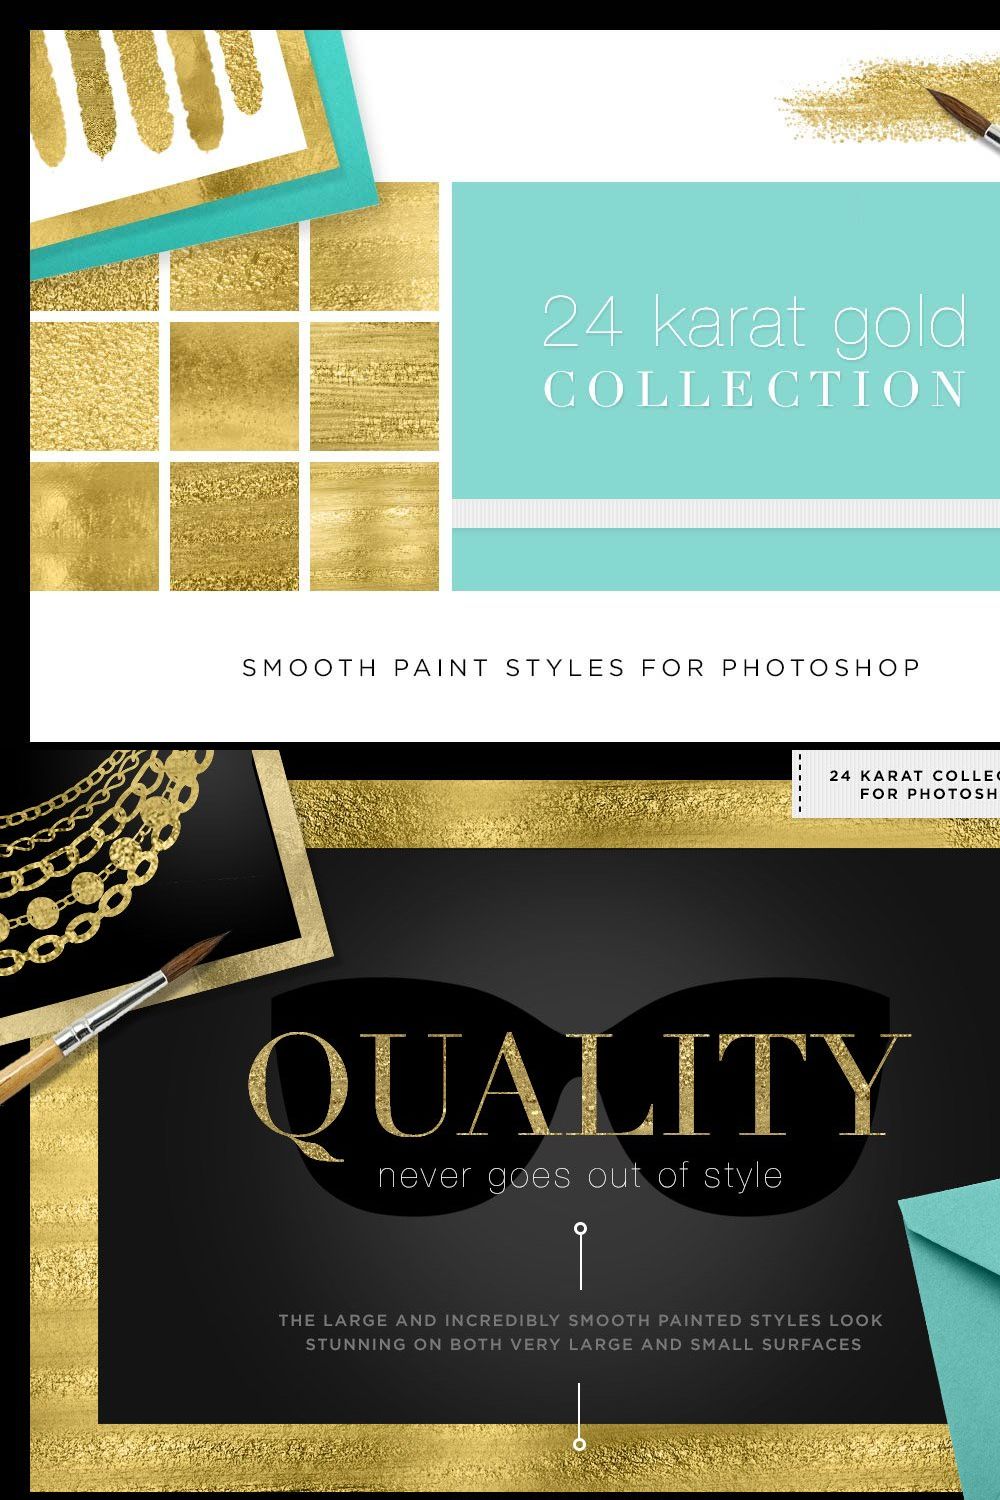 Liquid Gold Paint Textures+Styles PS pinterest preview image.